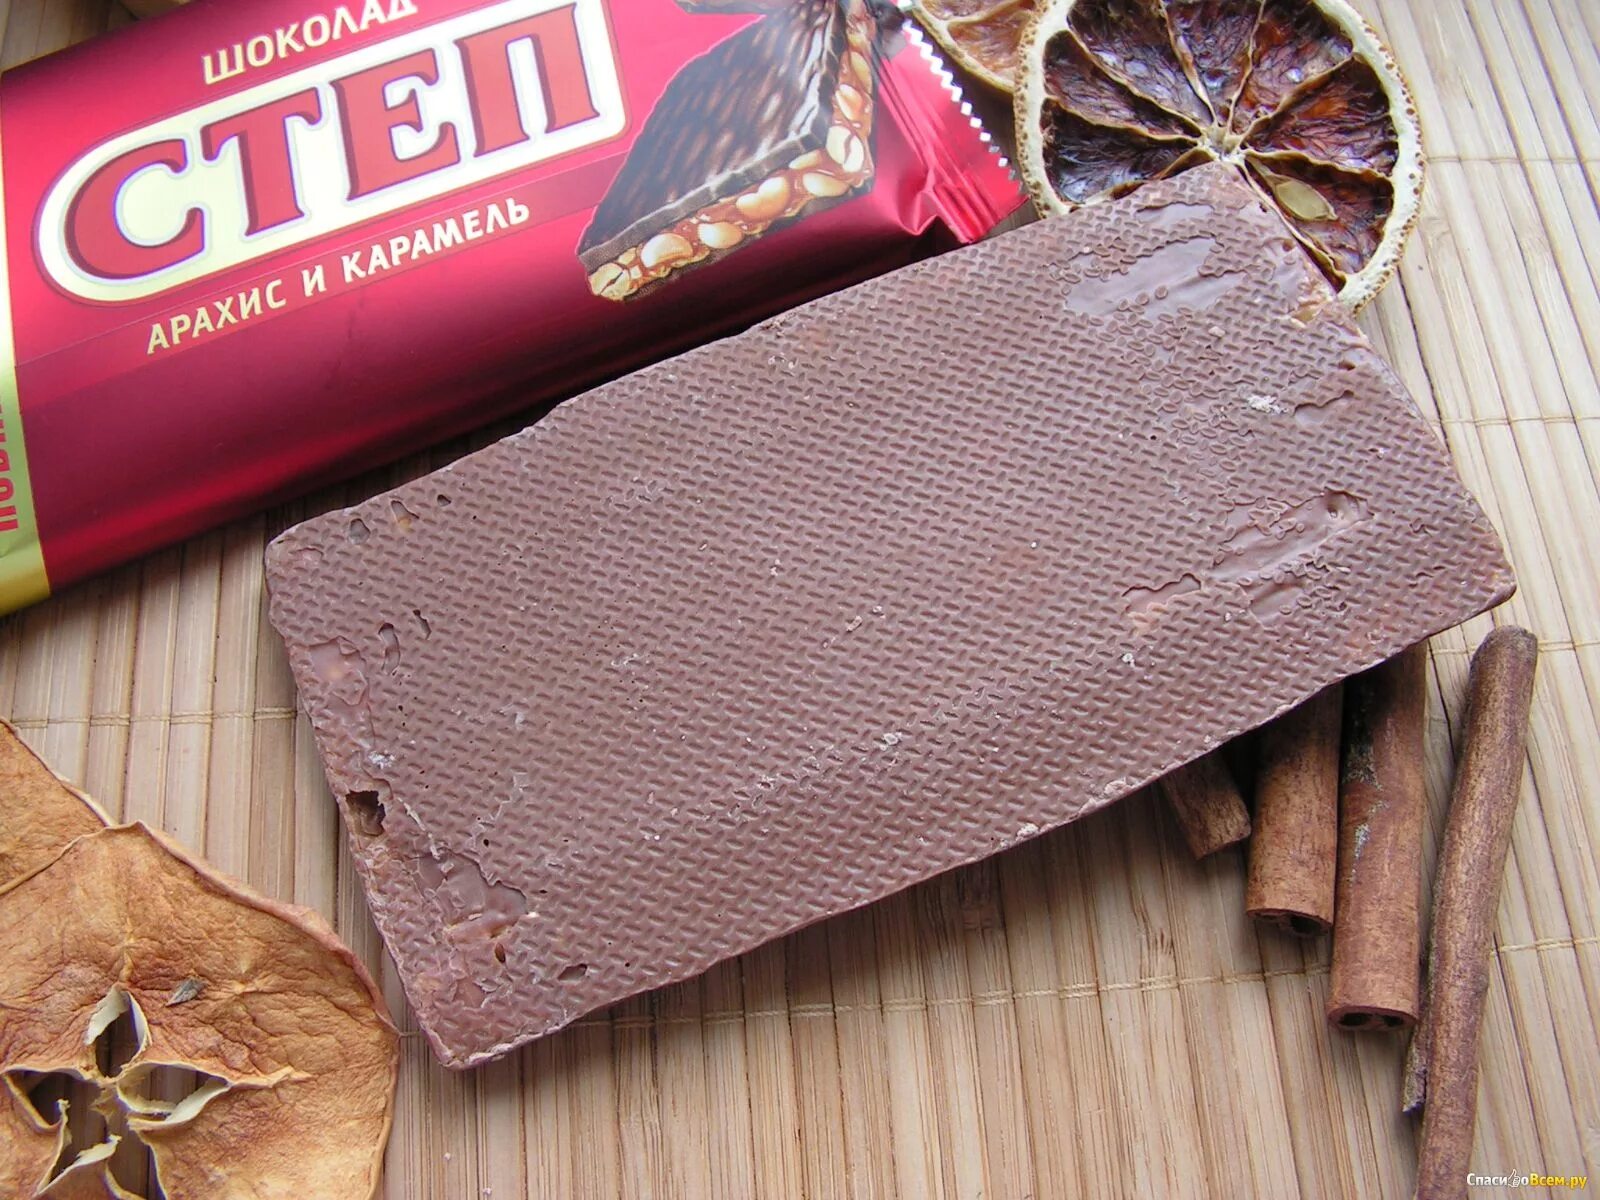 Шоколад арахис степ. Степ шоколад. Степ плитка шоколада. Шоколад степ арахис и карамель. Золотой степ шоколад.